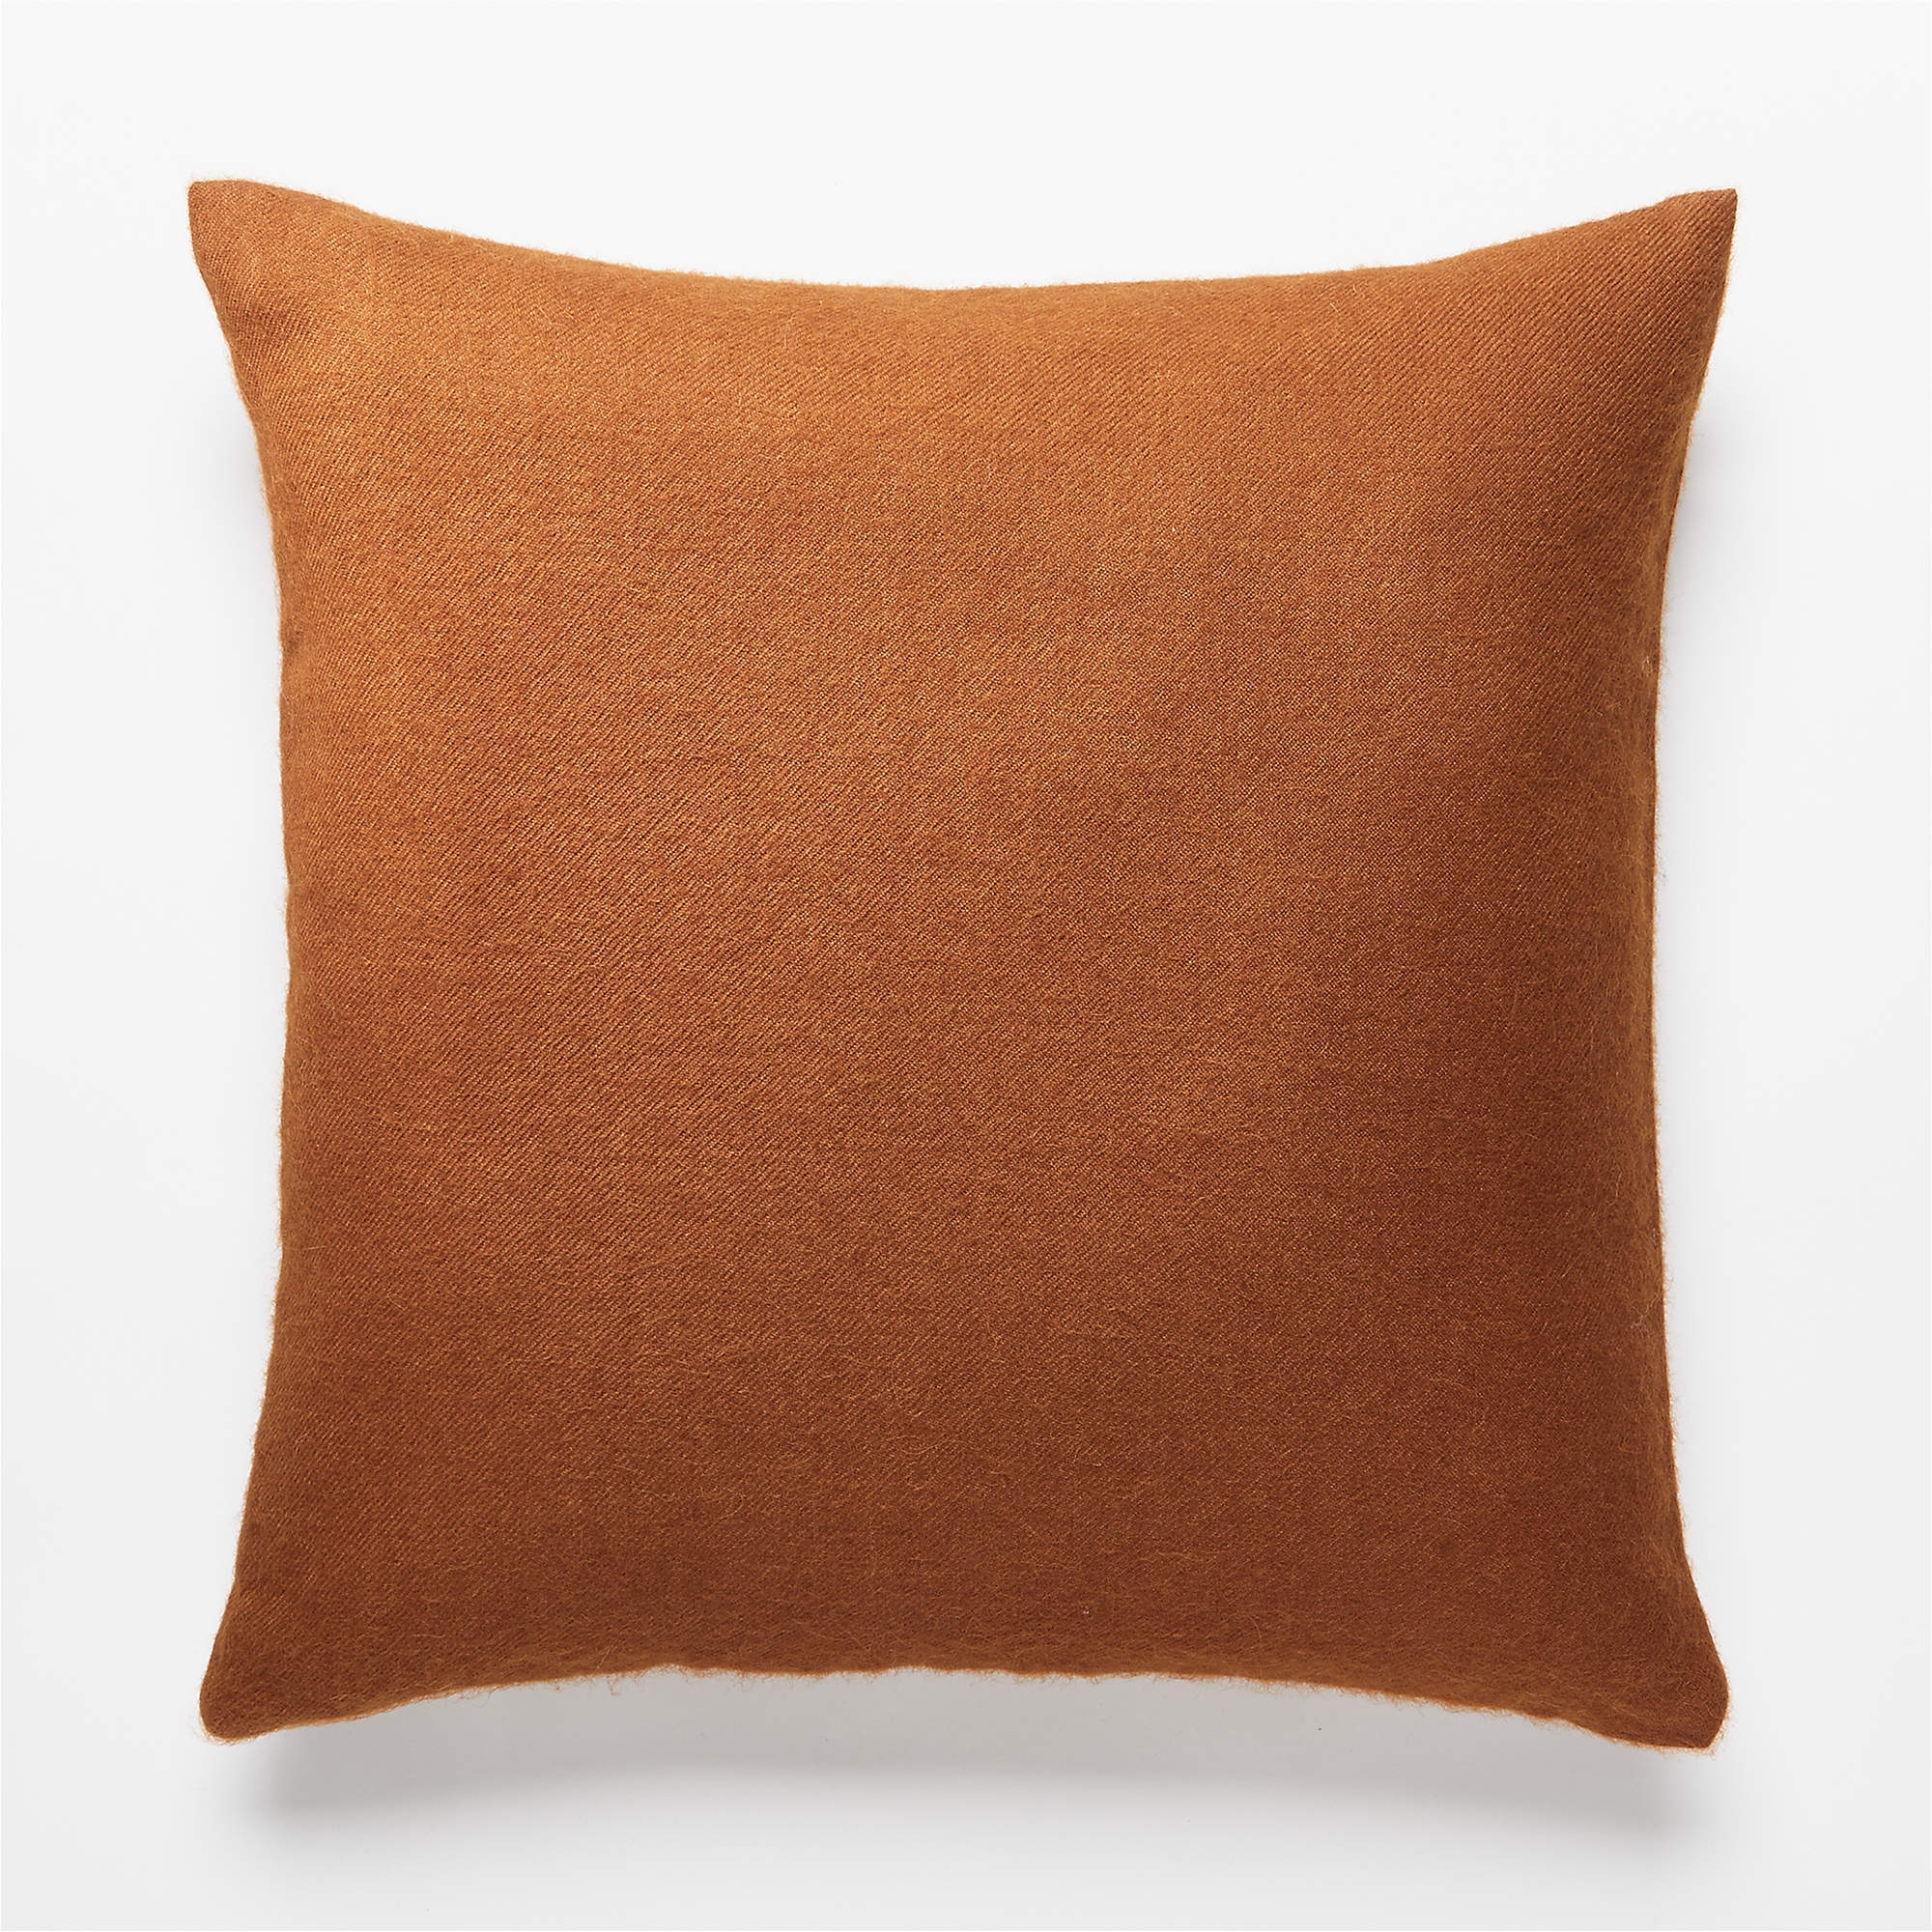 Alpaca Copper Pillow with Down-Alternative Insert, 20" x 20" - Image 0